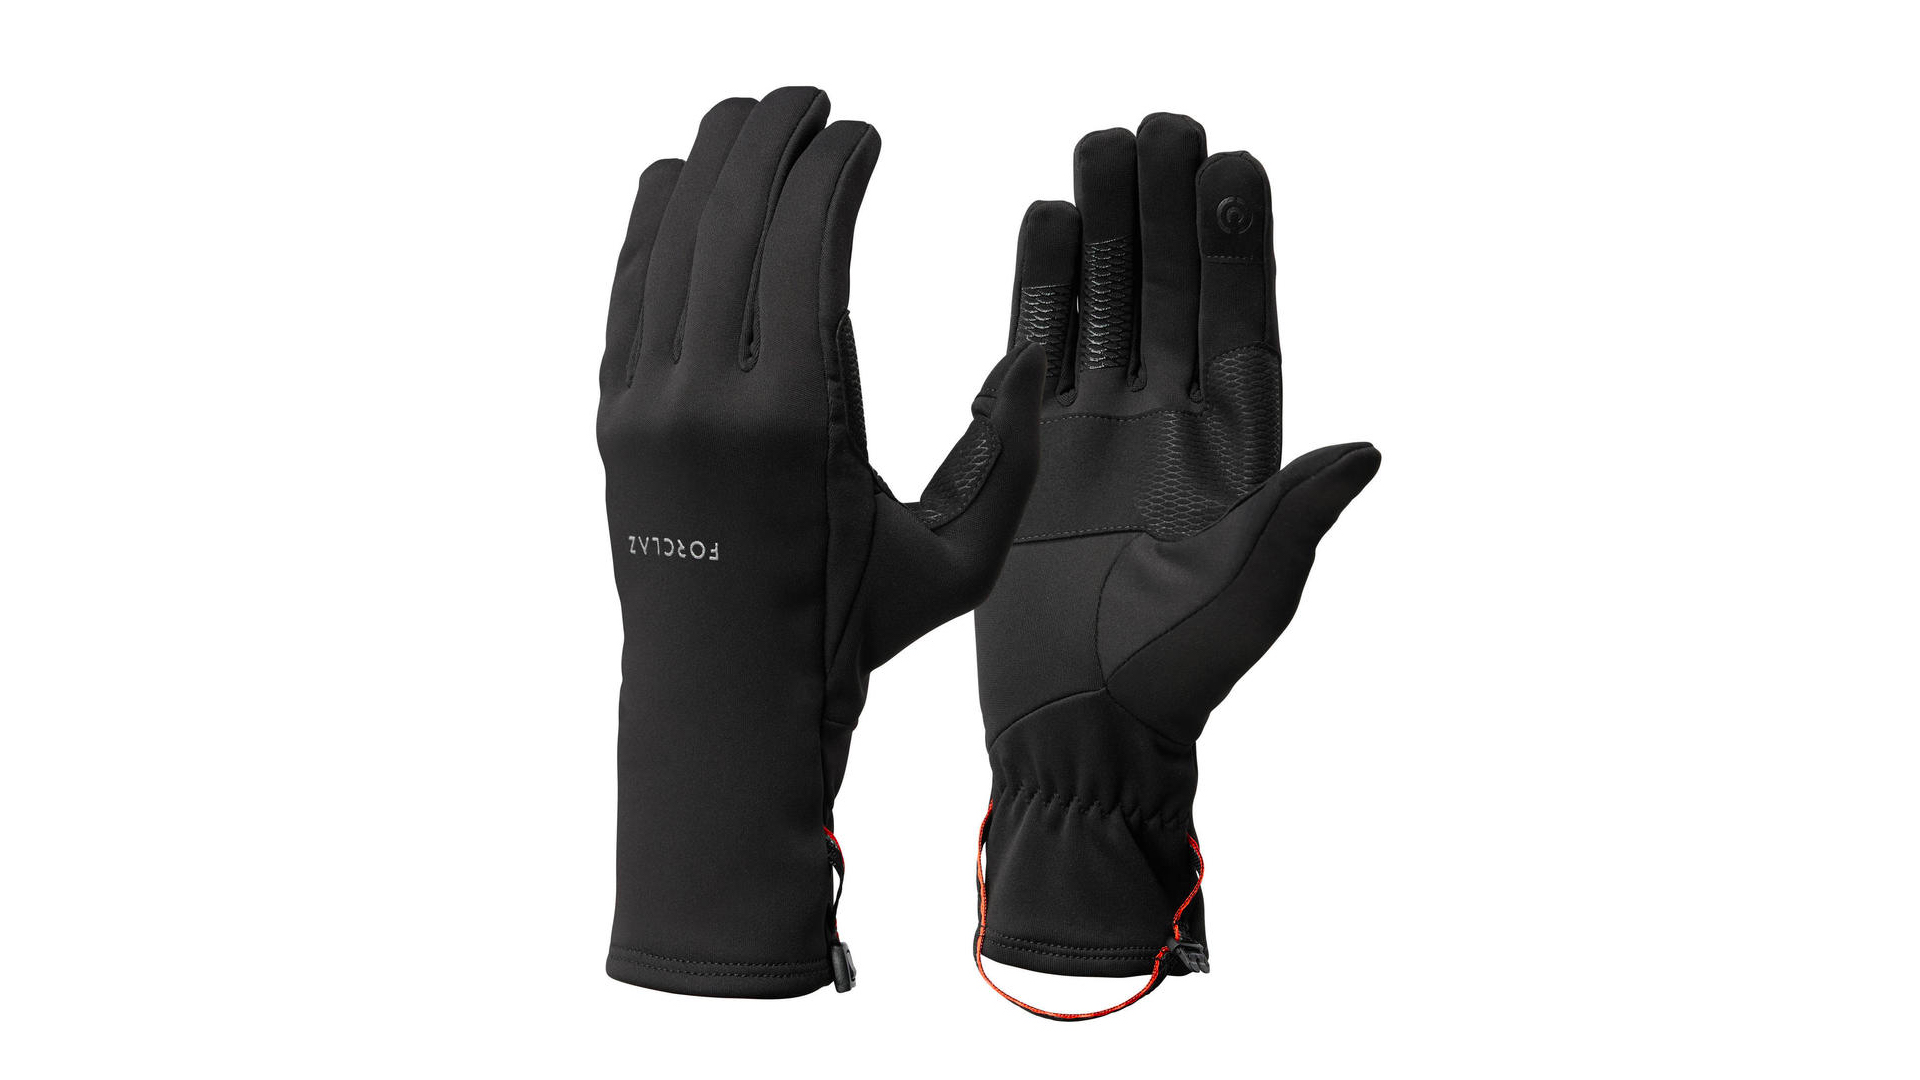 Forclaz Mountain Trek 500 | review Advnture gloves